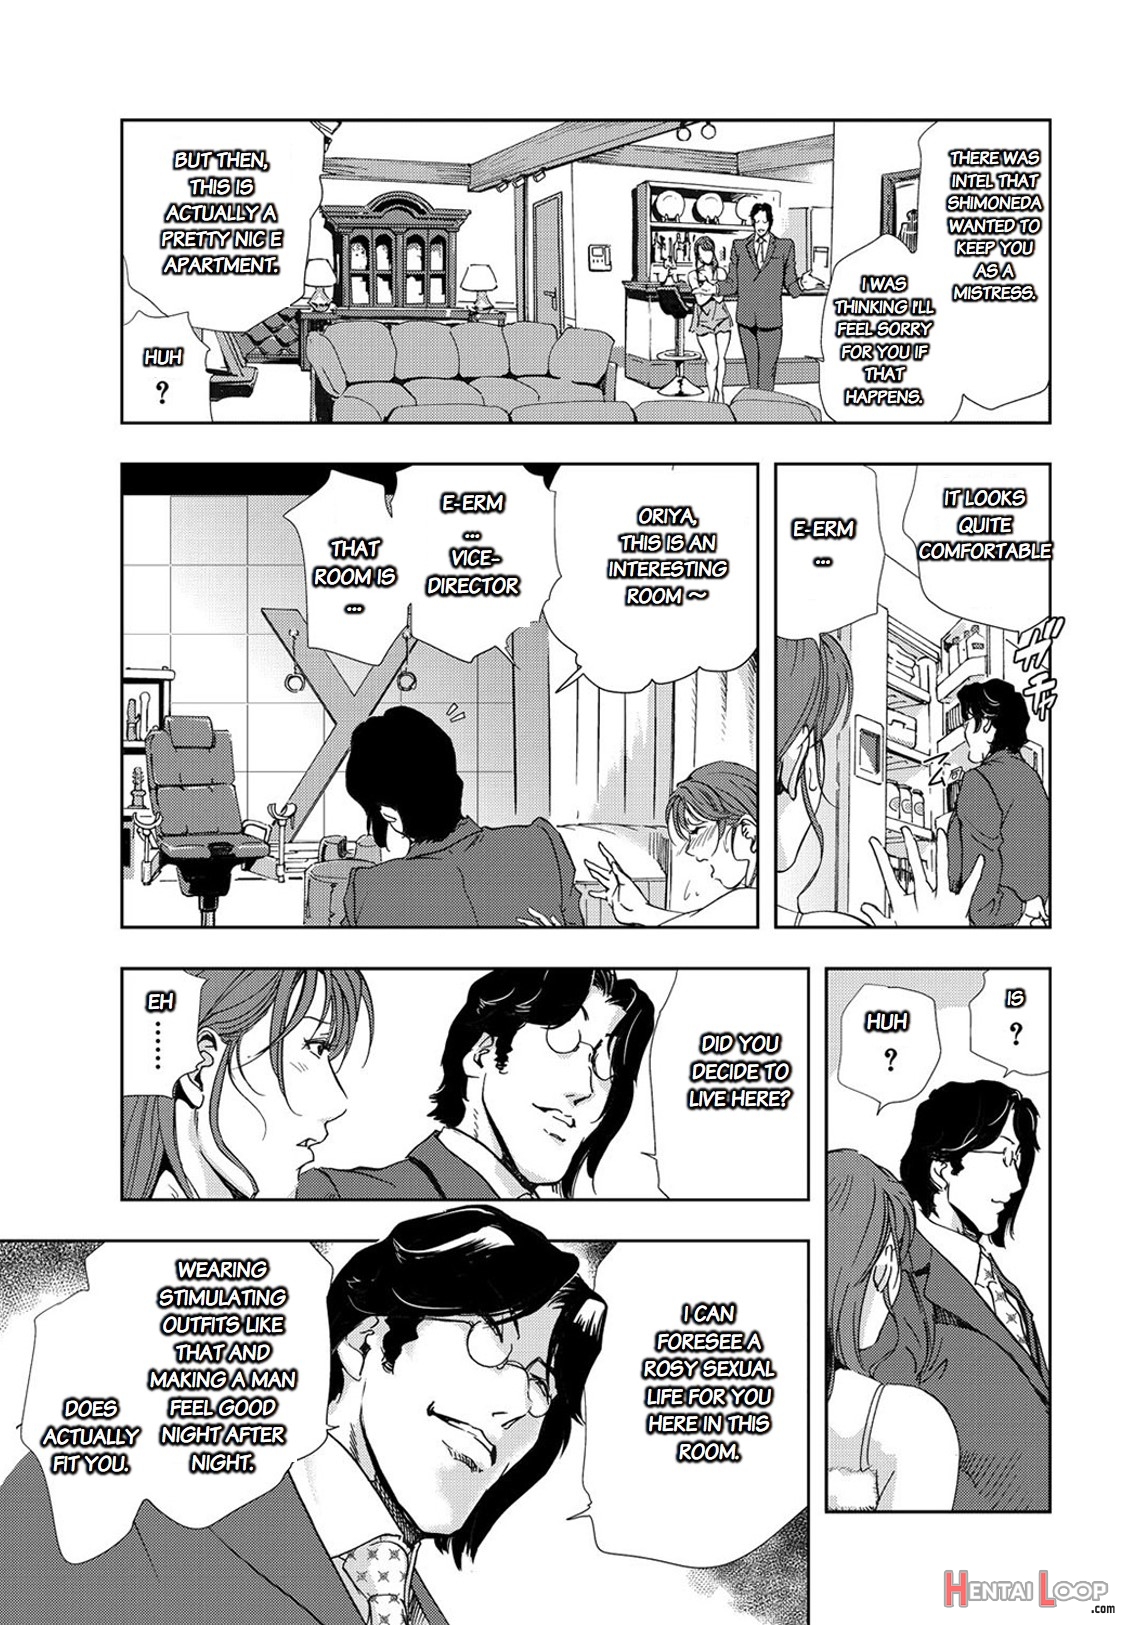 Nikuhisyo Yukiko Chapter 25-2 page 21